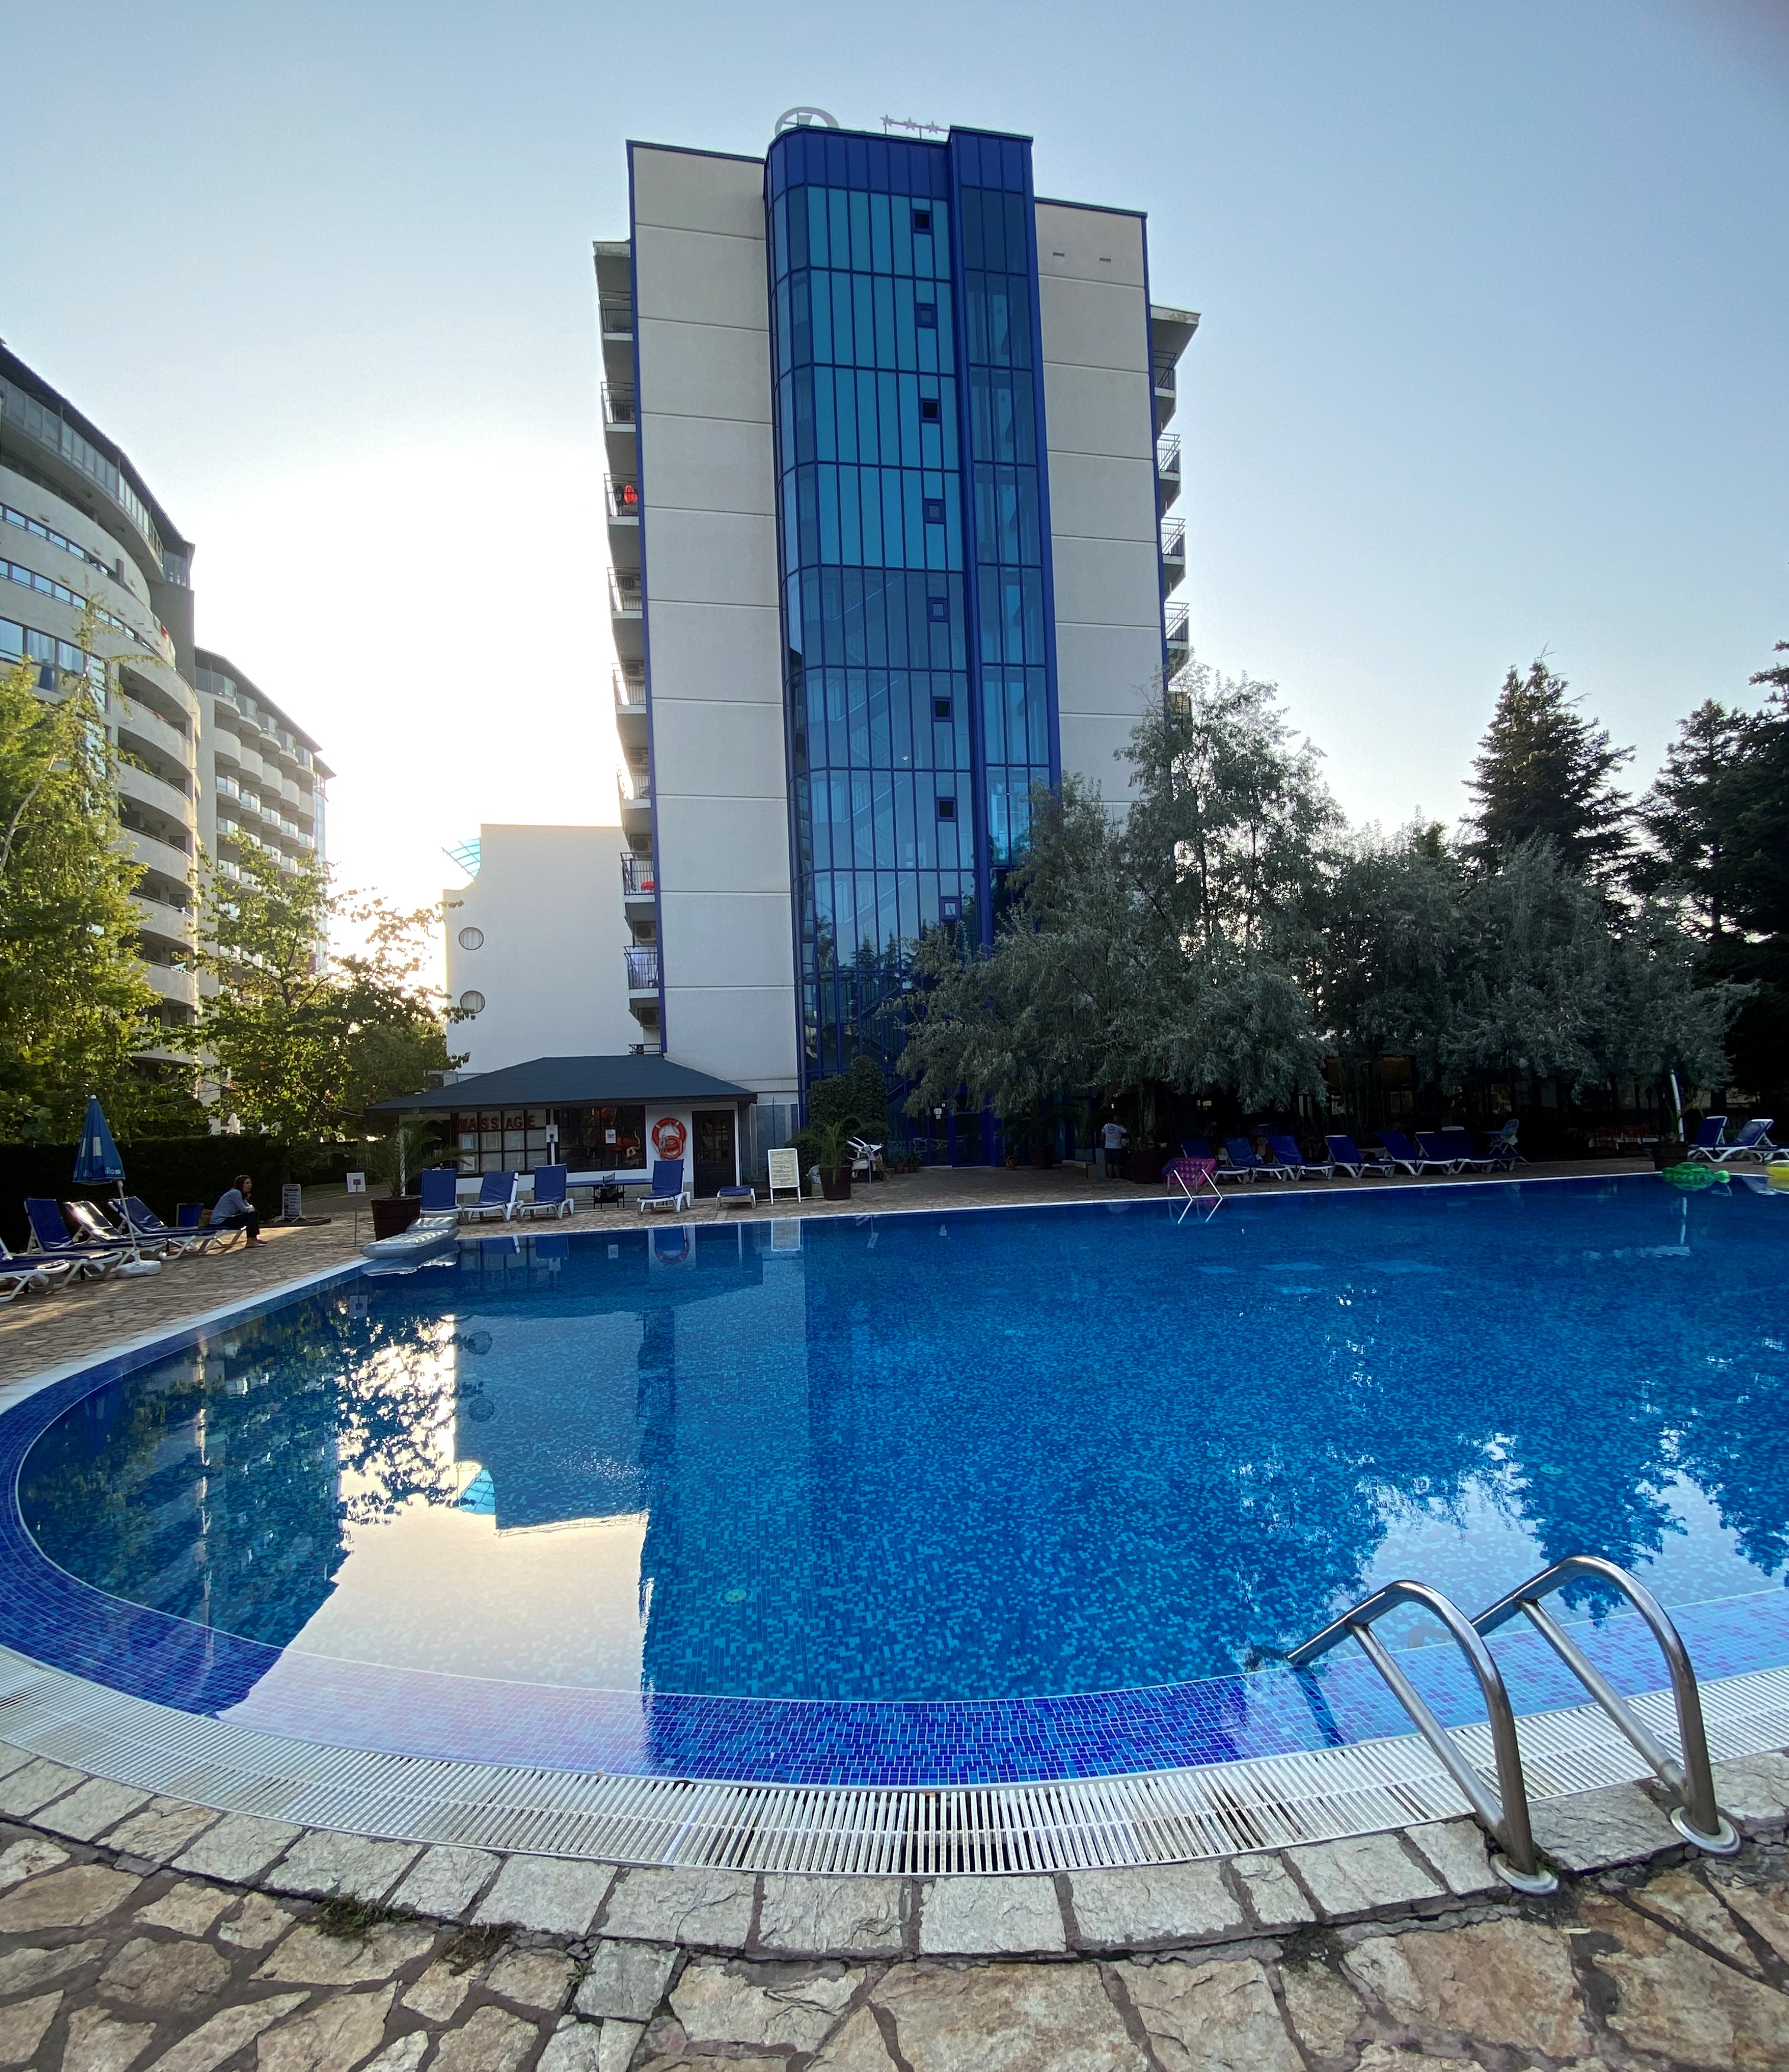 Letovanje Bugarska autobusom, Sunčev breg, Hotel Dunav, izgled hotela